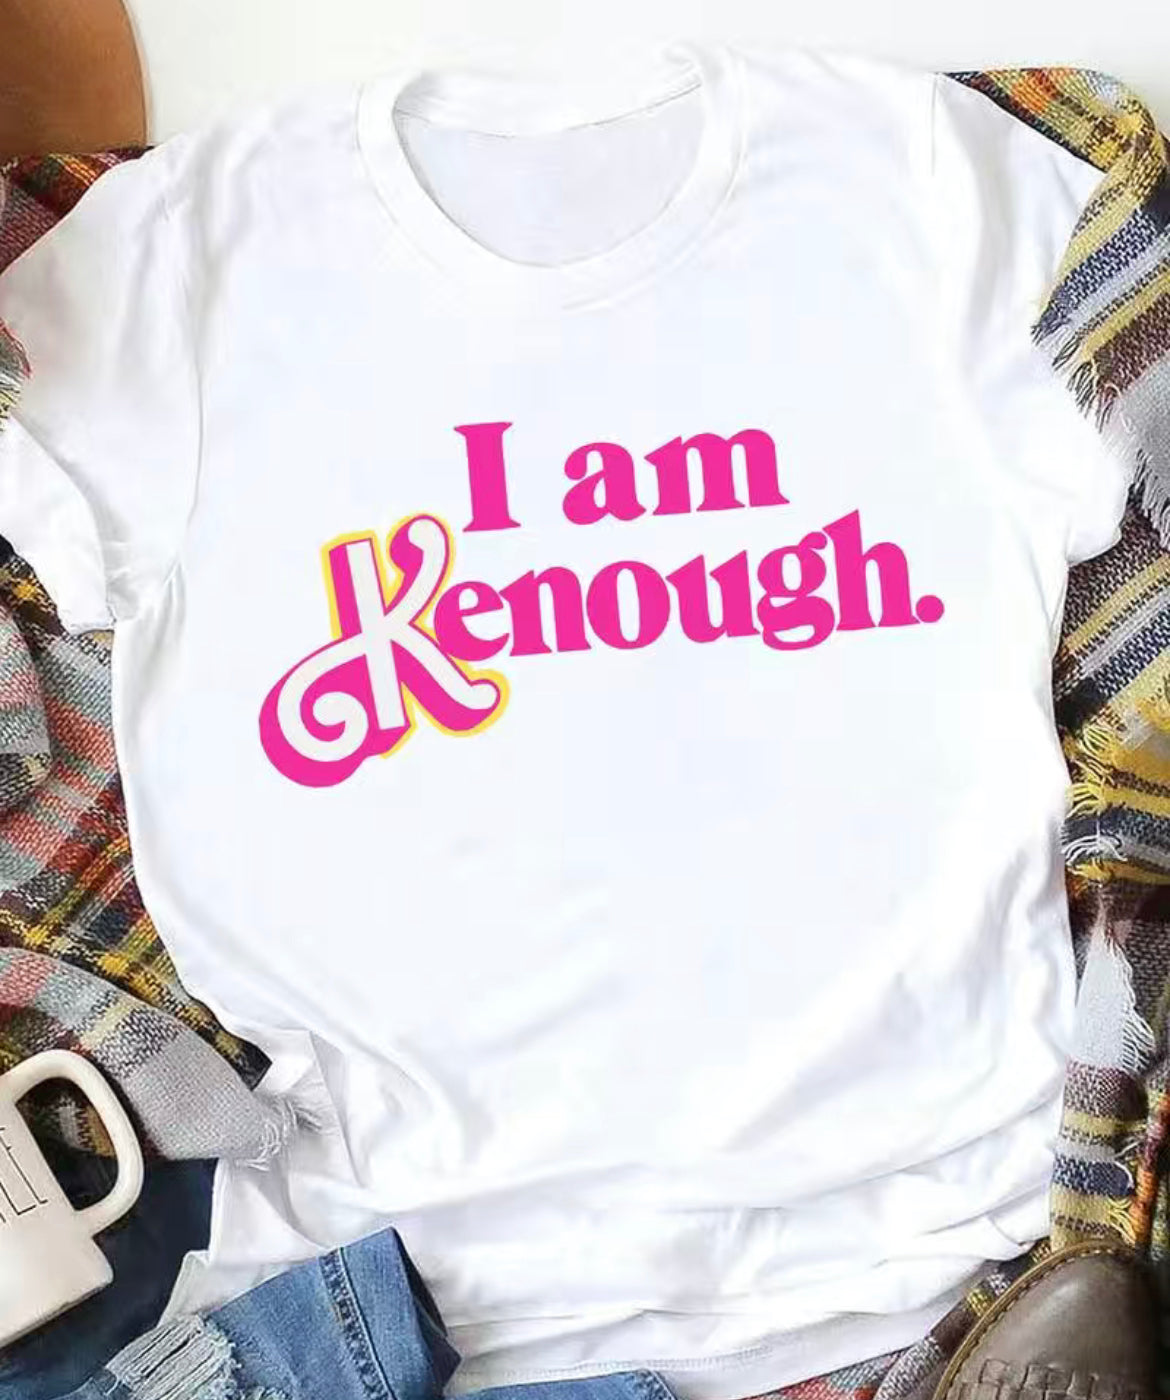 I am Kenough T-shirt